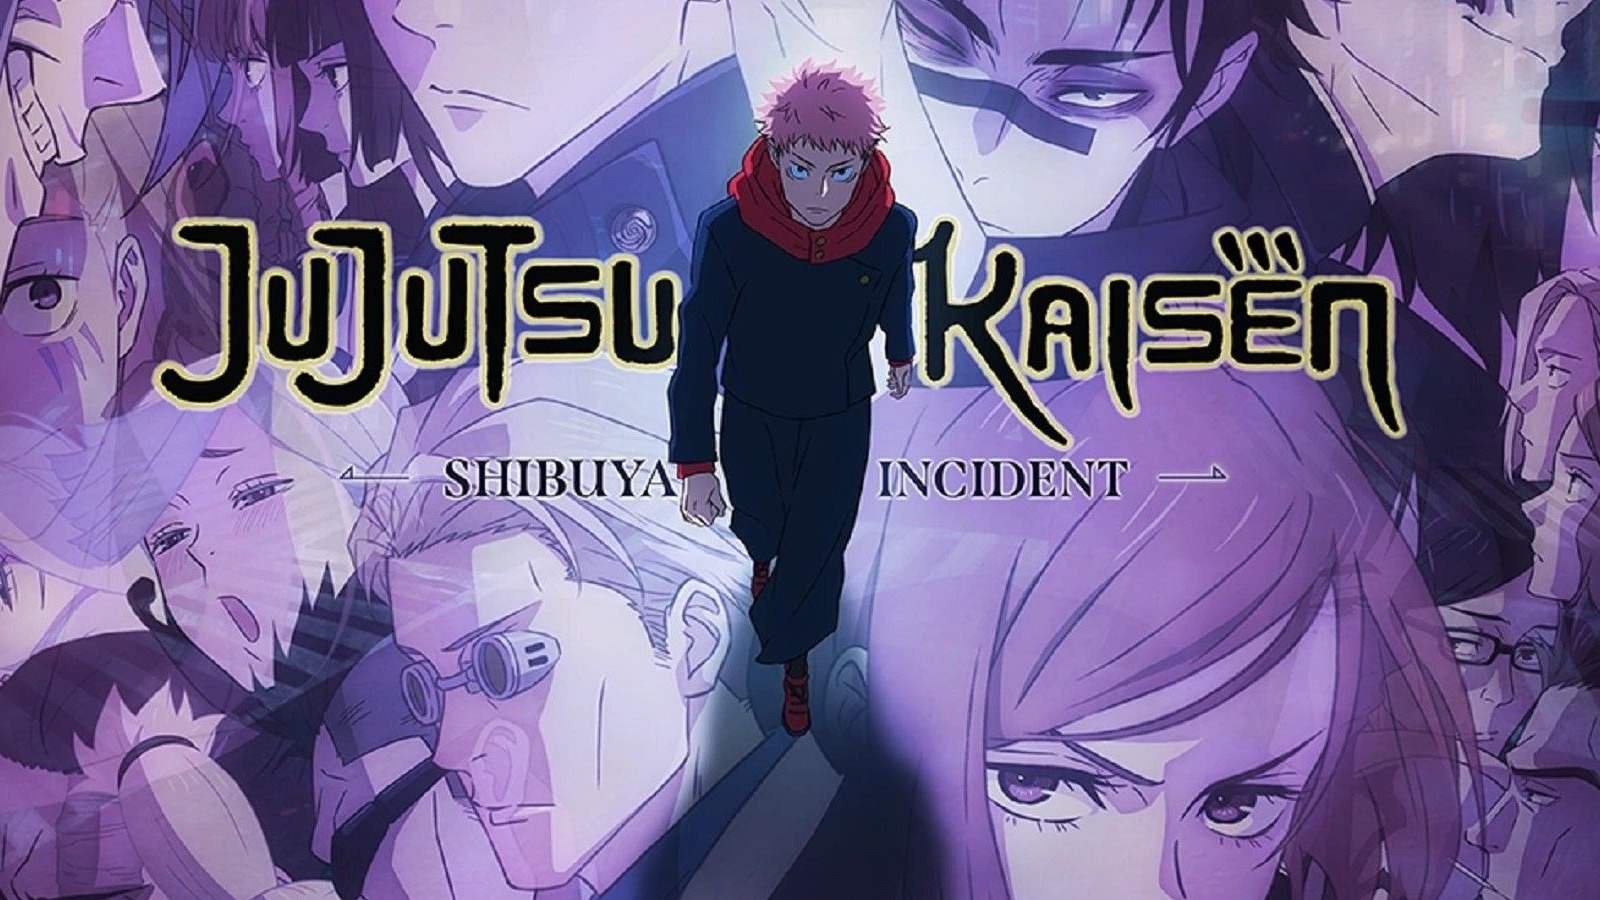 Jujutsu Kaisen season 2 release schedule: When is episode 23 out?